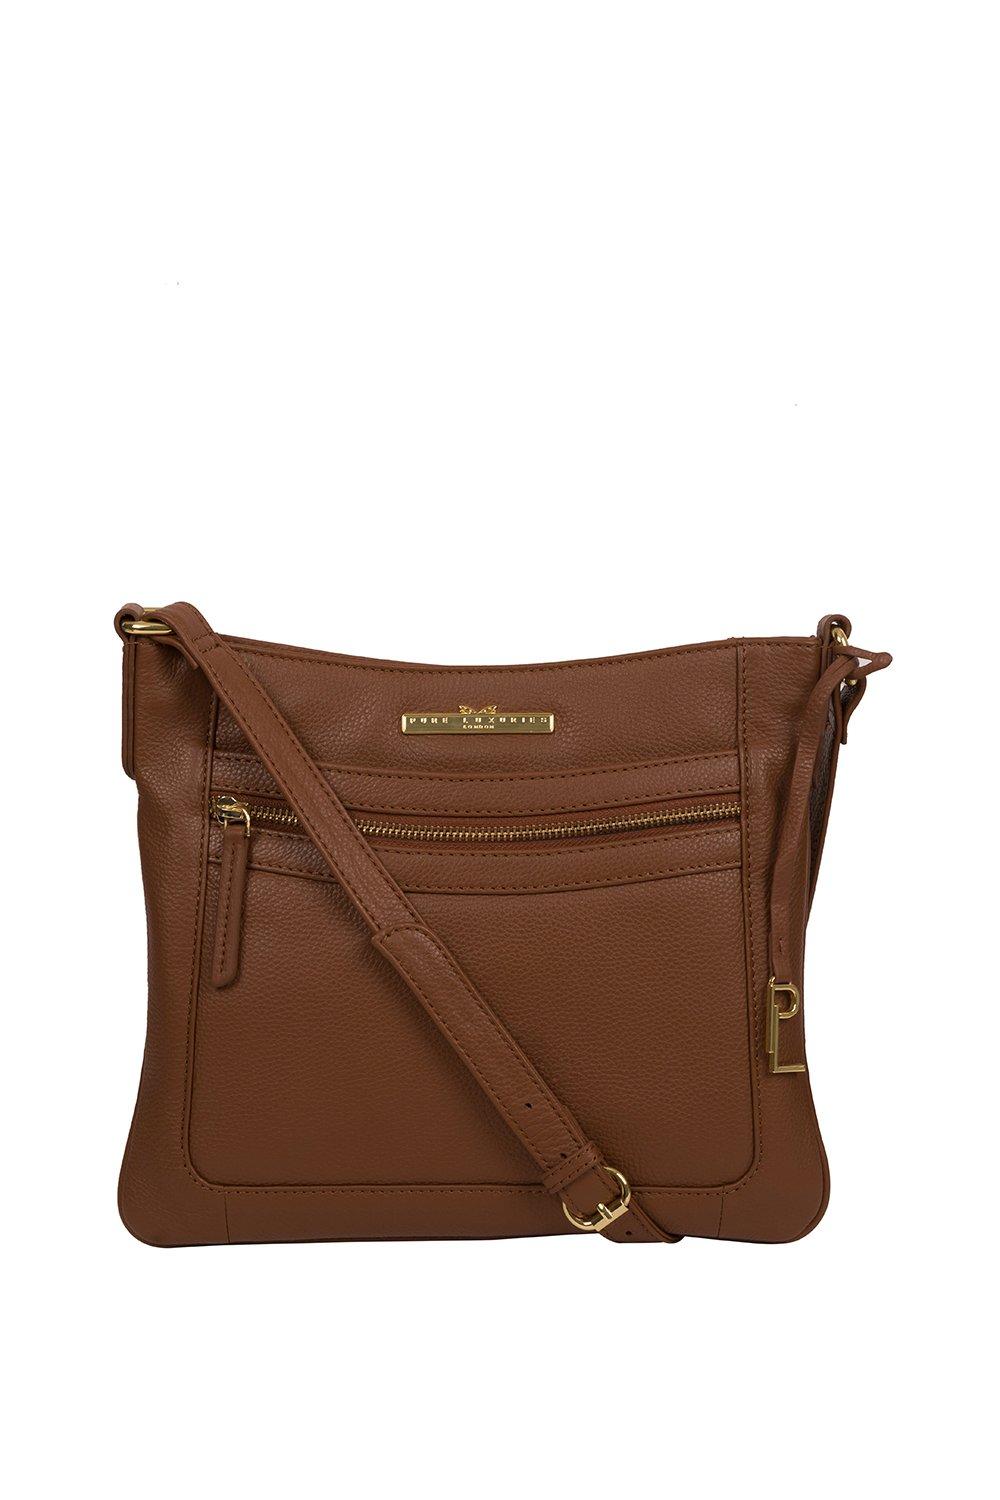 Debenhams | Handbags, Purses & Women's Bags for Sale | Gumtree